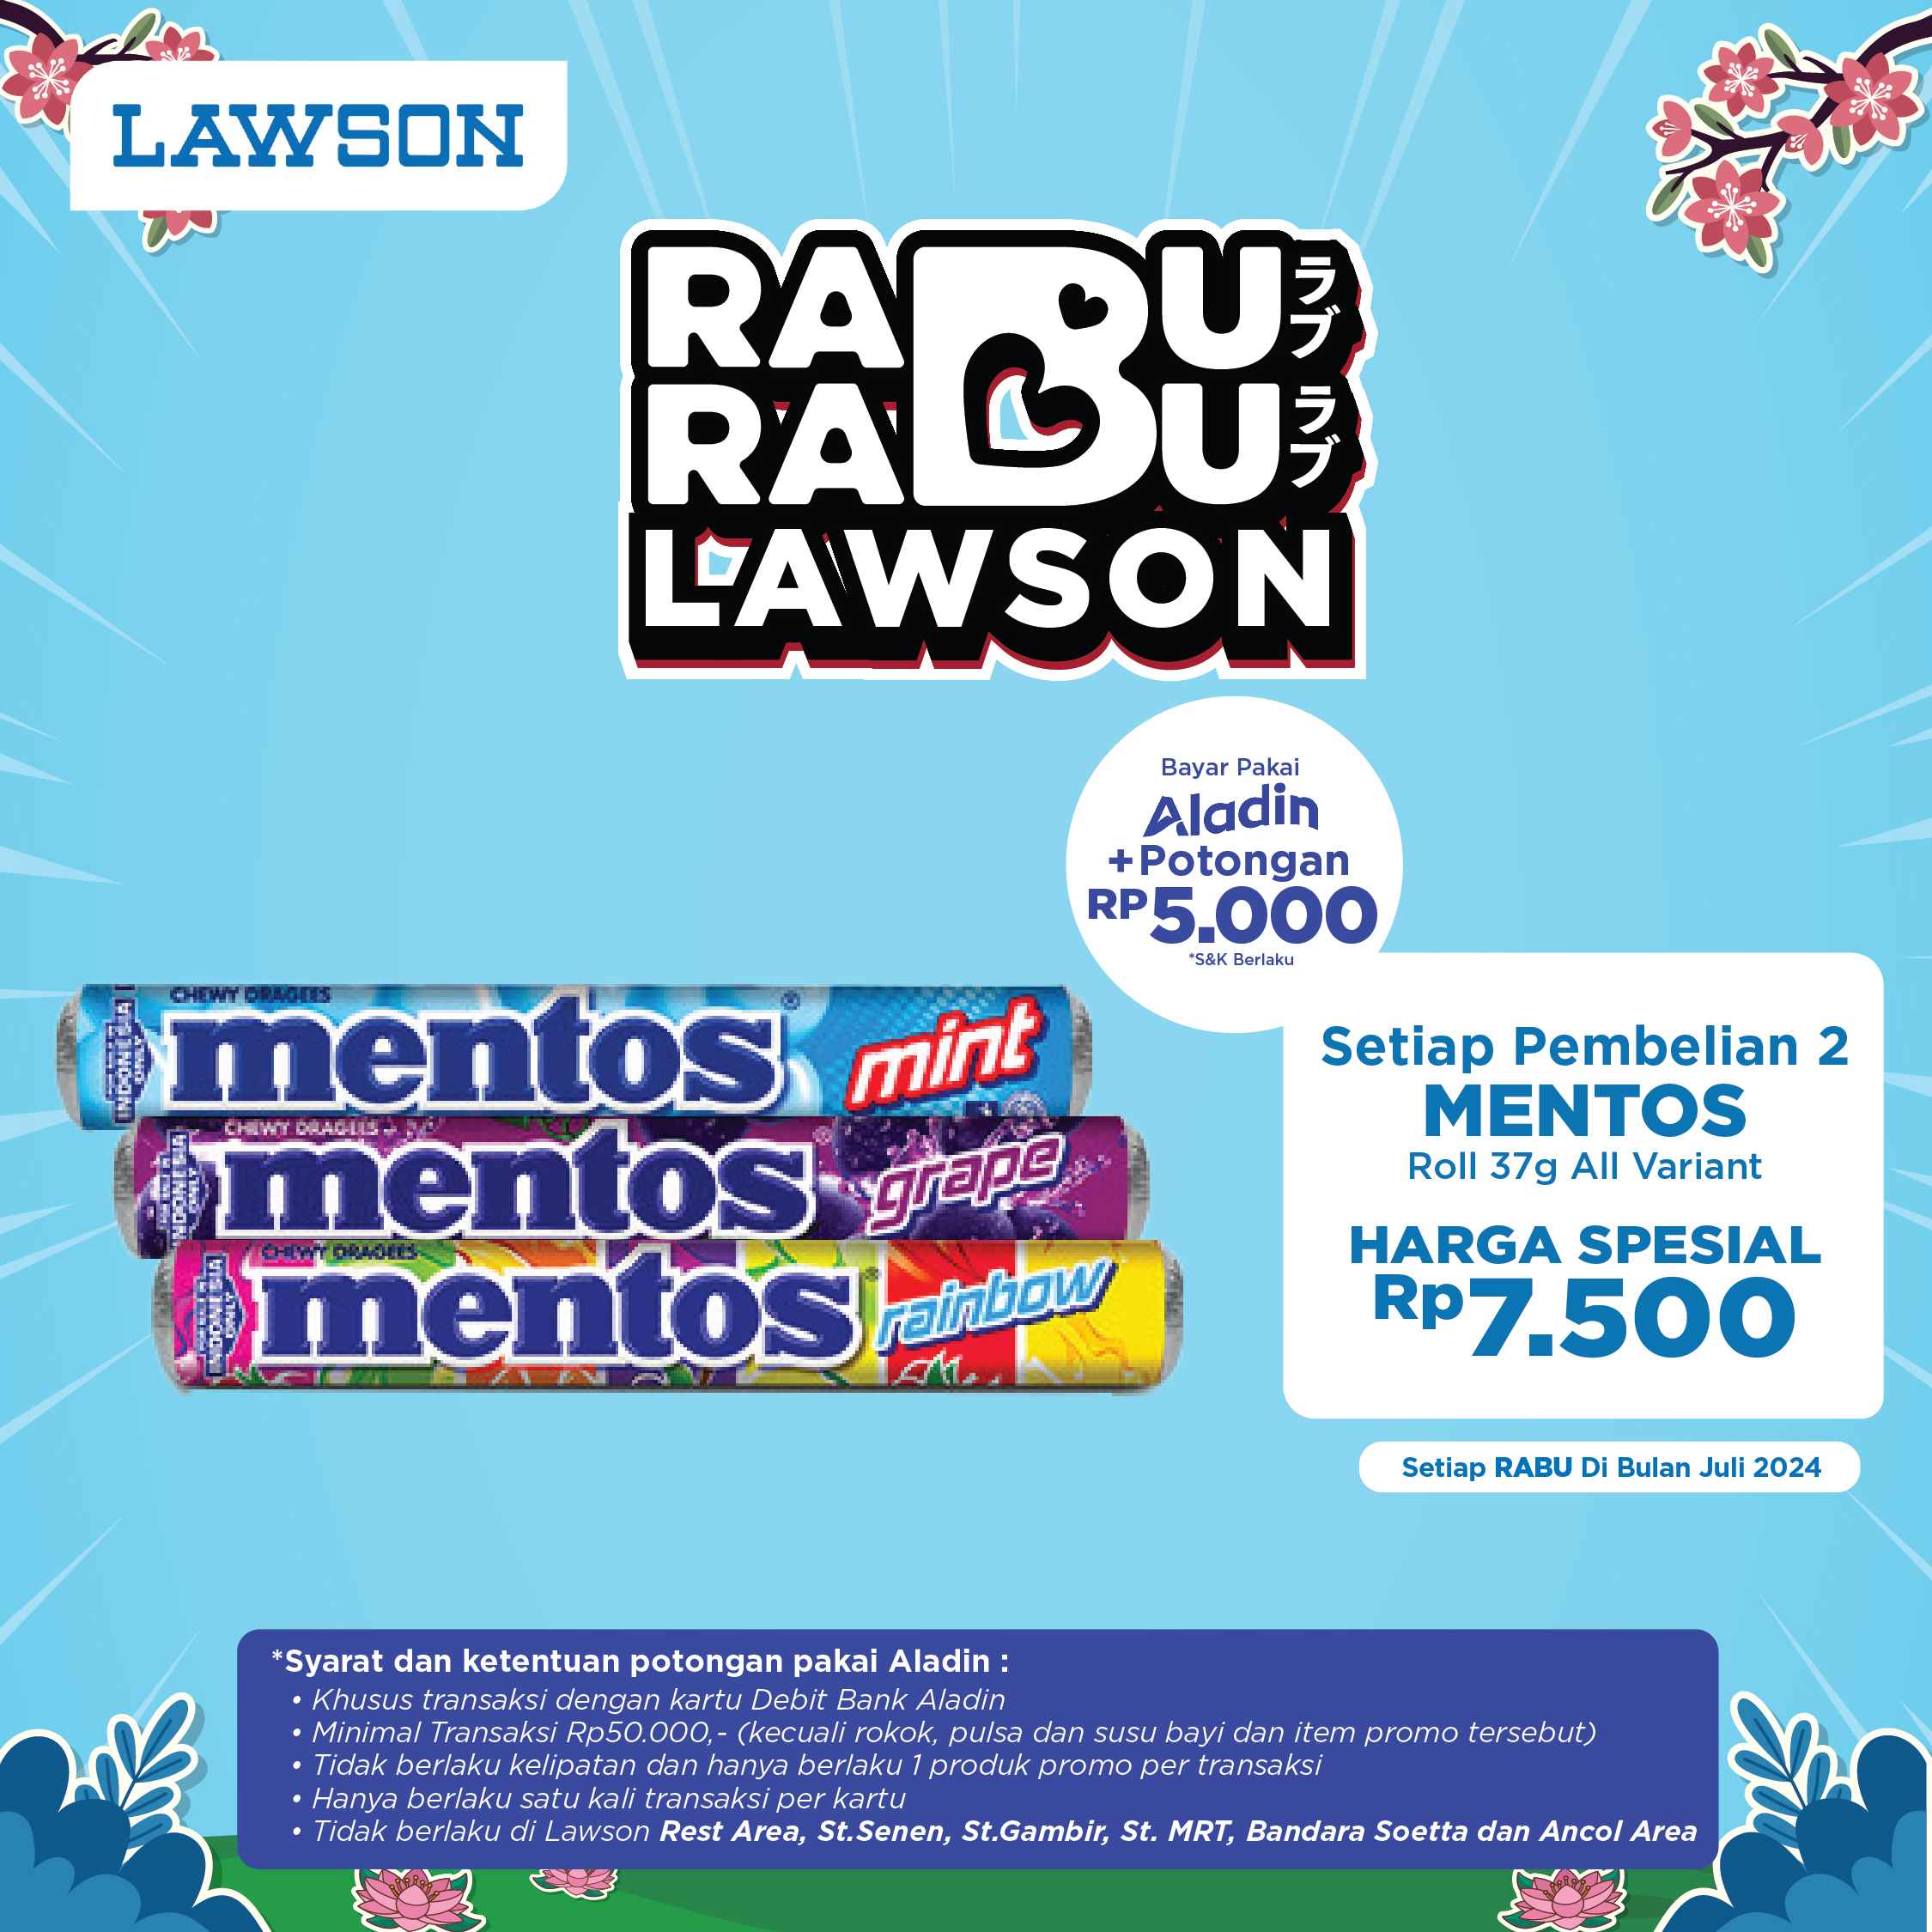 Rabu Rabu Lawson Mentos Edition!